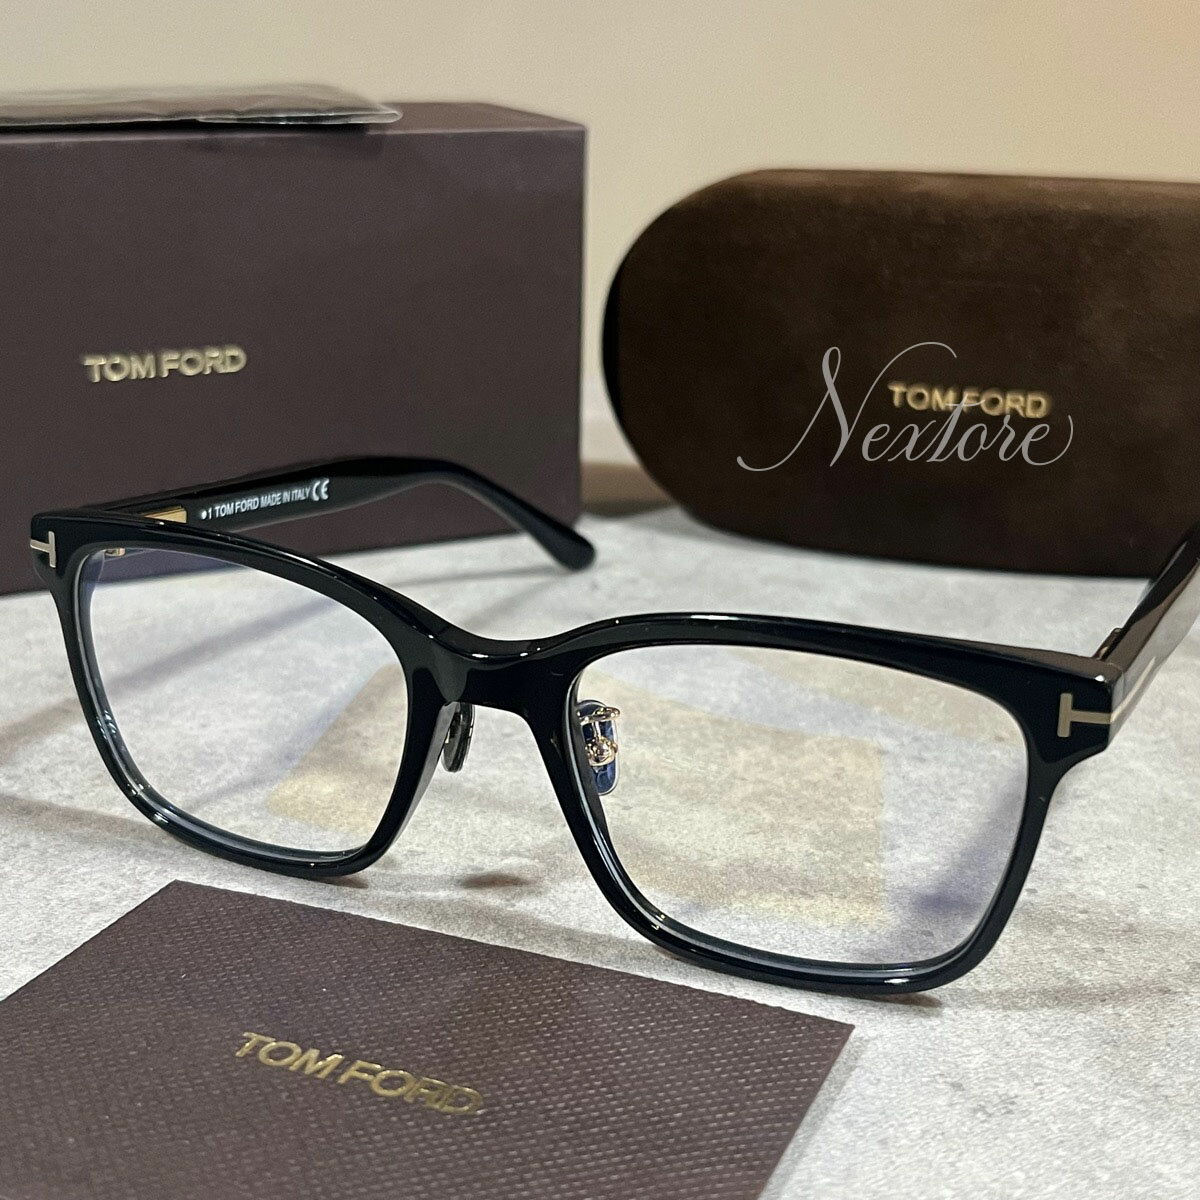 TOMFORD トムフォード TF5853db FT5853db 055 イタリア製 サングラス メガネ 眼鏡 メンズ レディース TOM FORD トム フォード 伊達メガネ ビジネス 普段使い おしゃれ プレゼント ギフト 並行輸入品 クリスマス